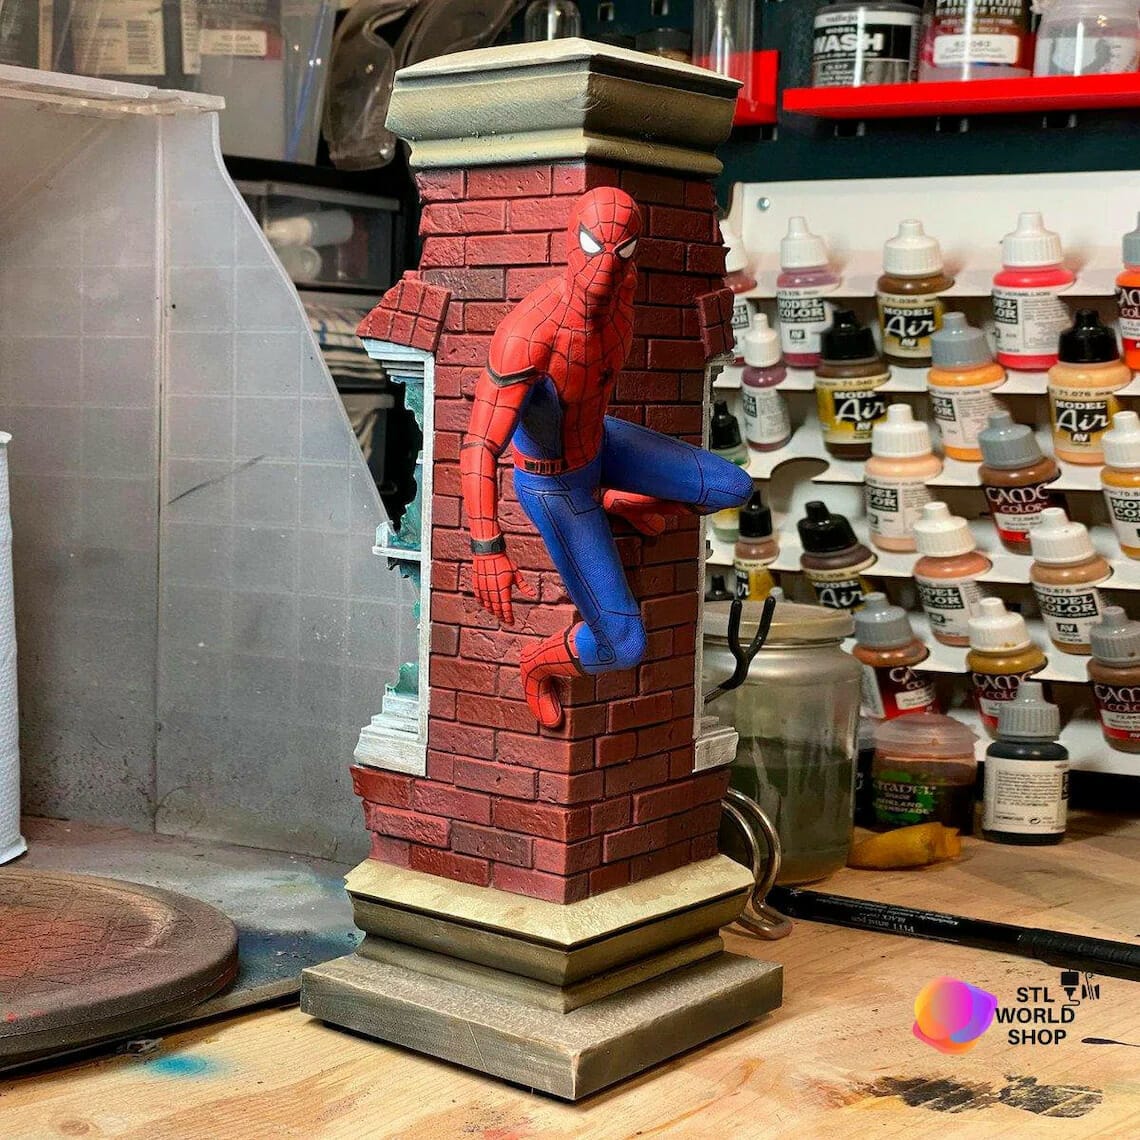 Spider-man hanging to red brick corner